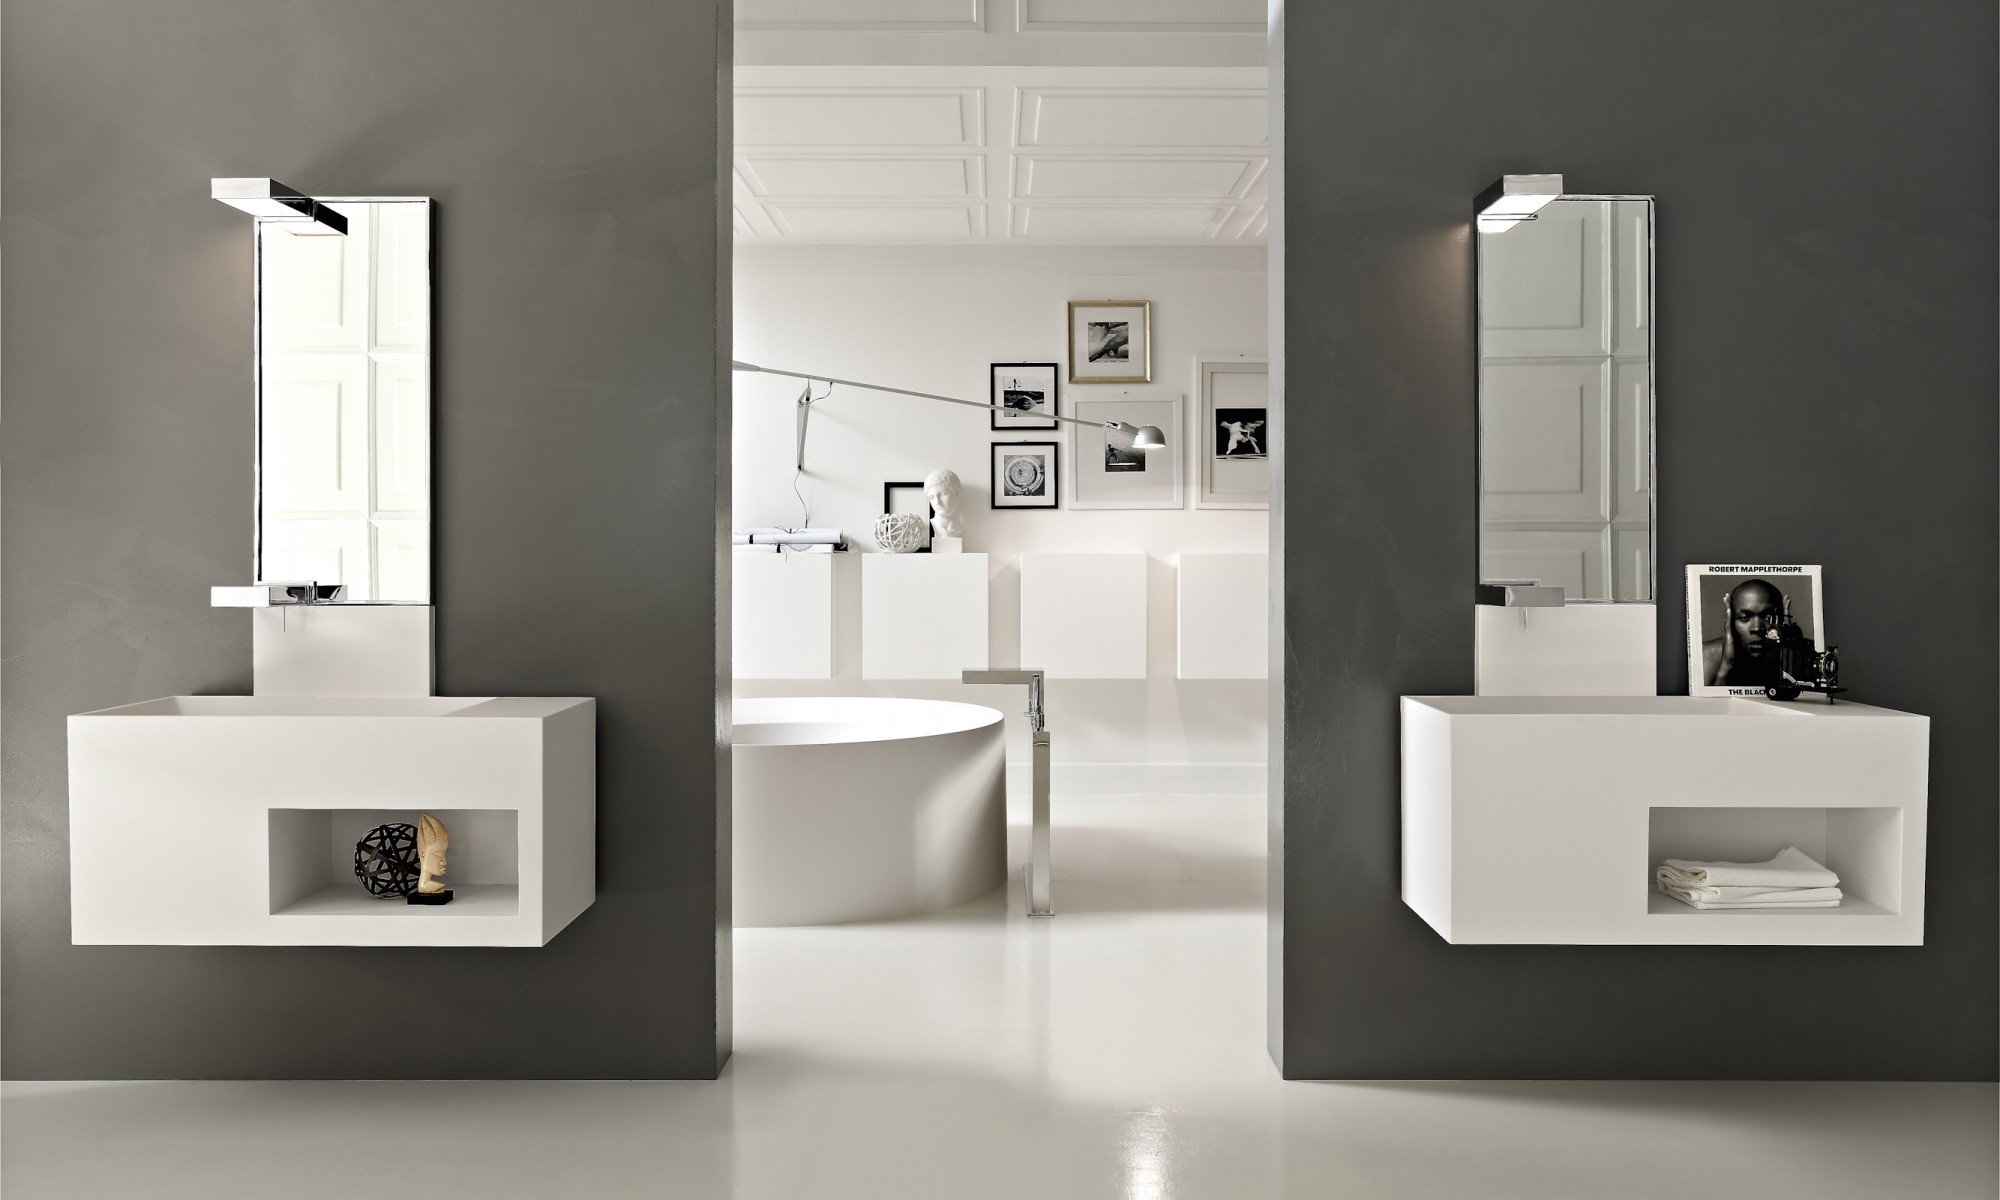 Italian Design in the Bathroom